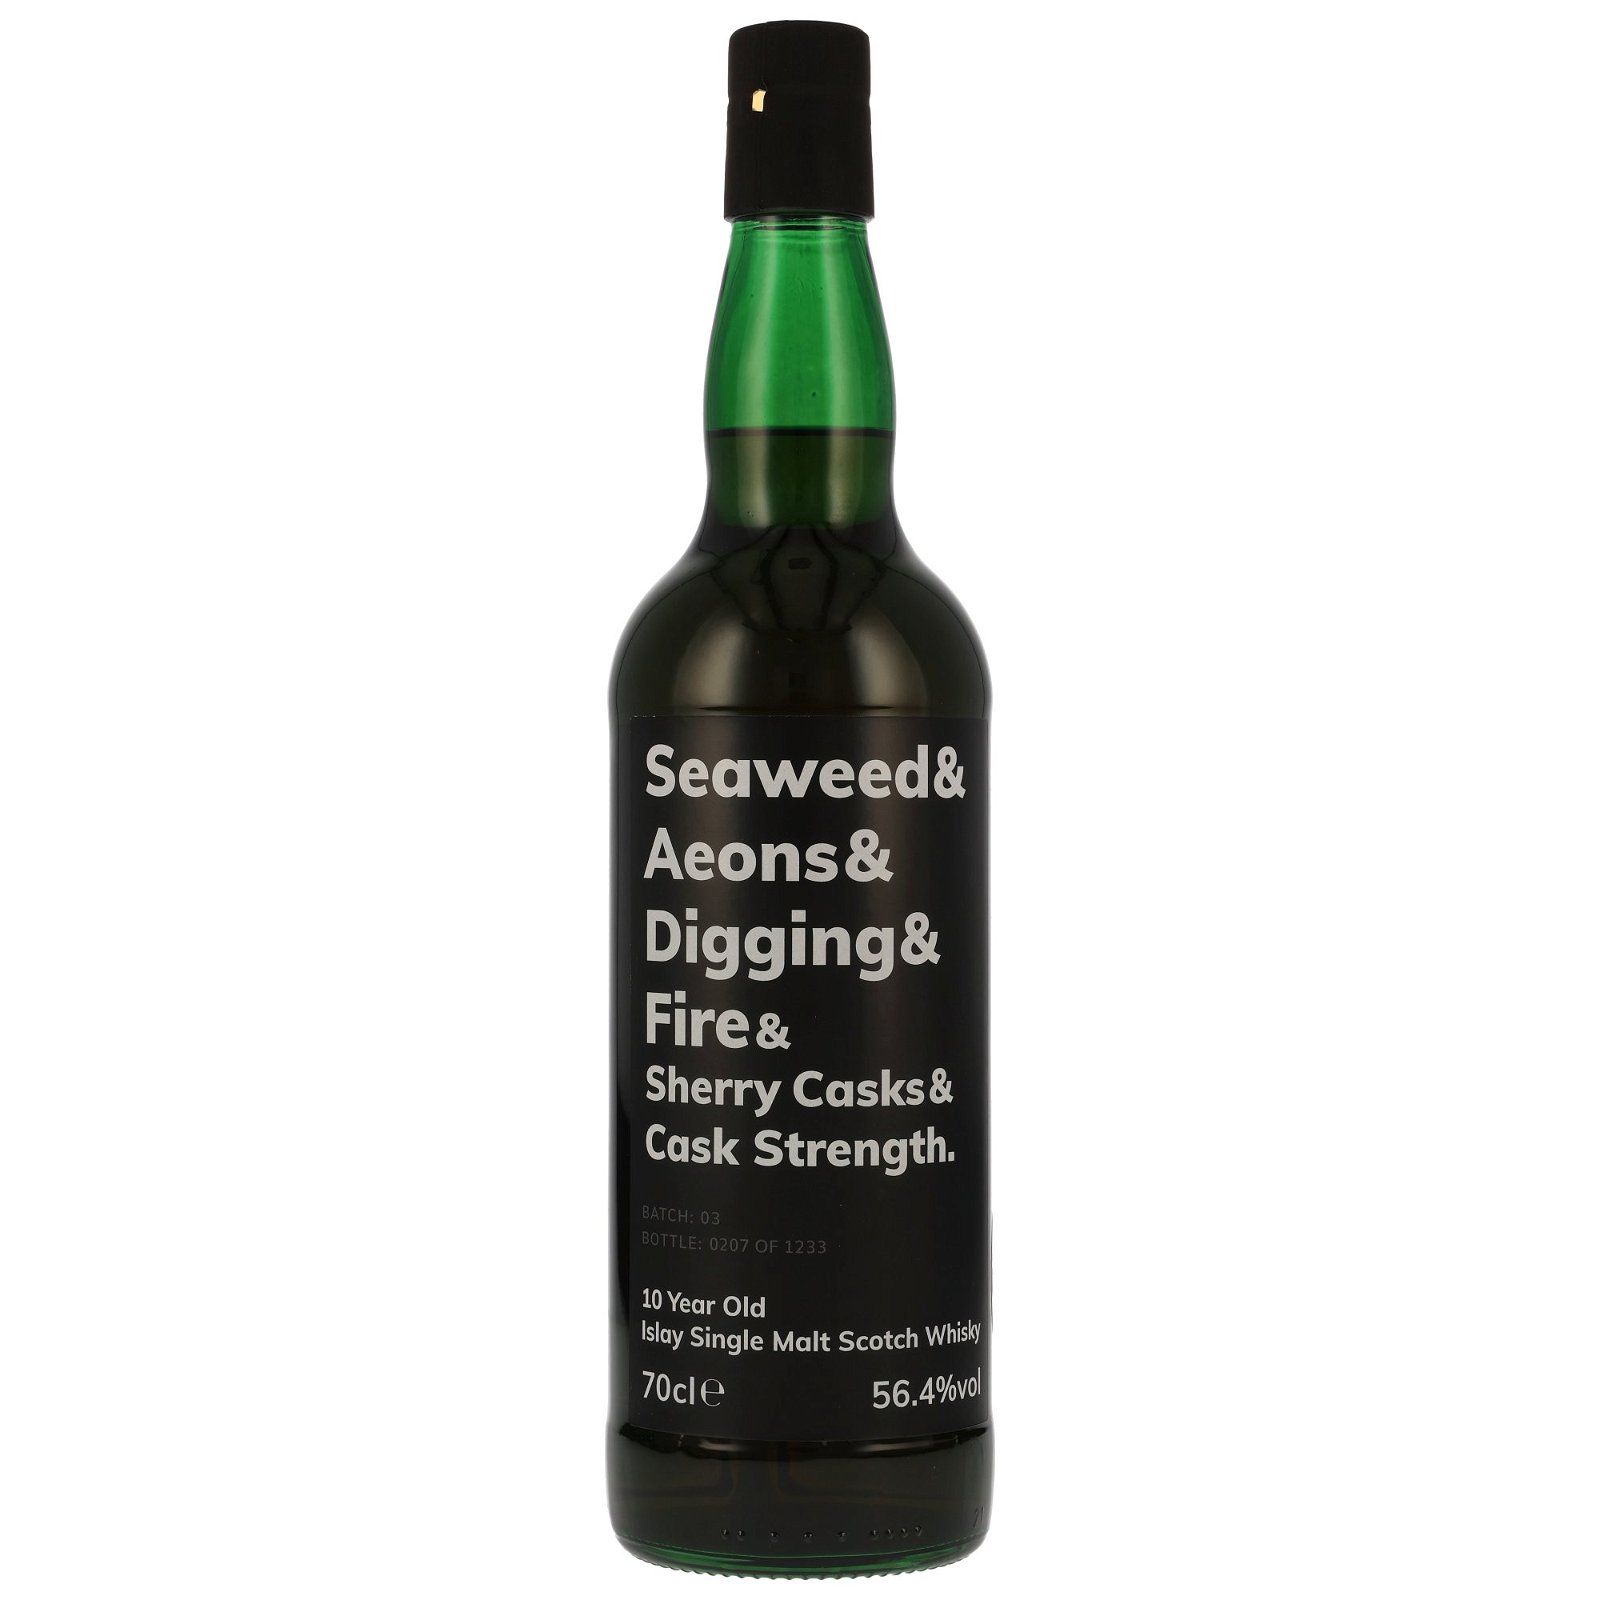 Seaweed & Aeons & Digging & Fire & Sherry Casks & Cask Strength 10 Jahre Islay Single Malt Scotch Whisky Batch No. 03 (Atom Labs)